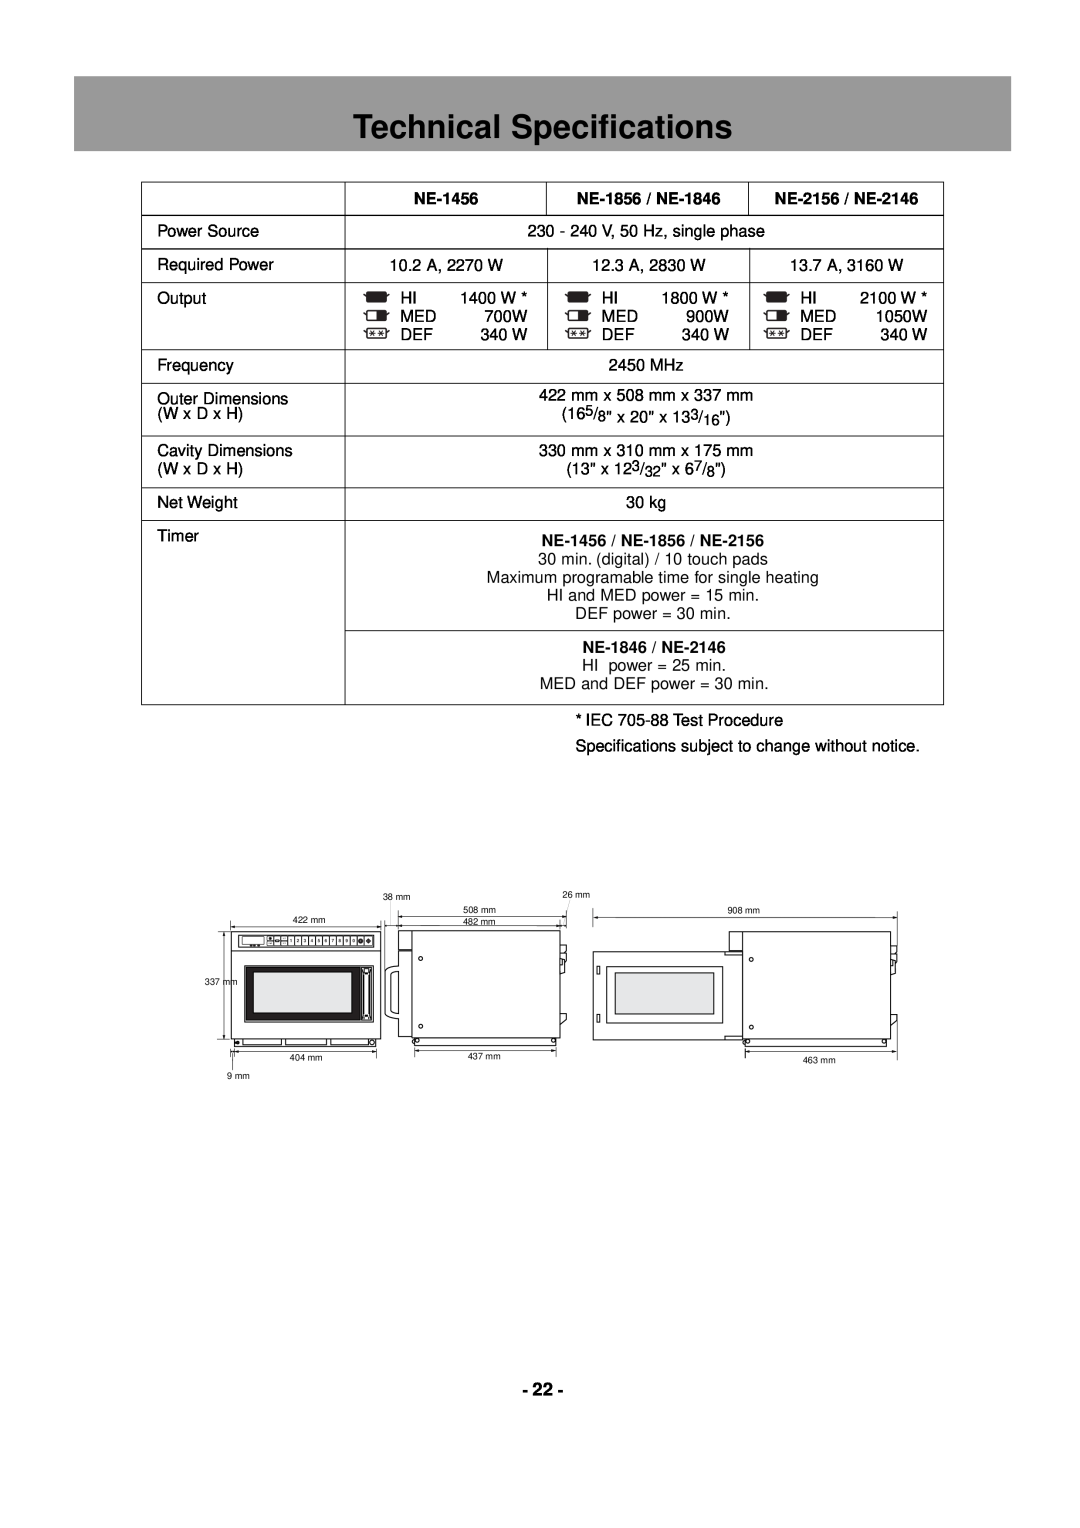 Panasonic Technical Specifications, NE-1856 / NE-1846, NE-2156 / NE-2146, NE-1456 / NE-1856 / NE-2156 